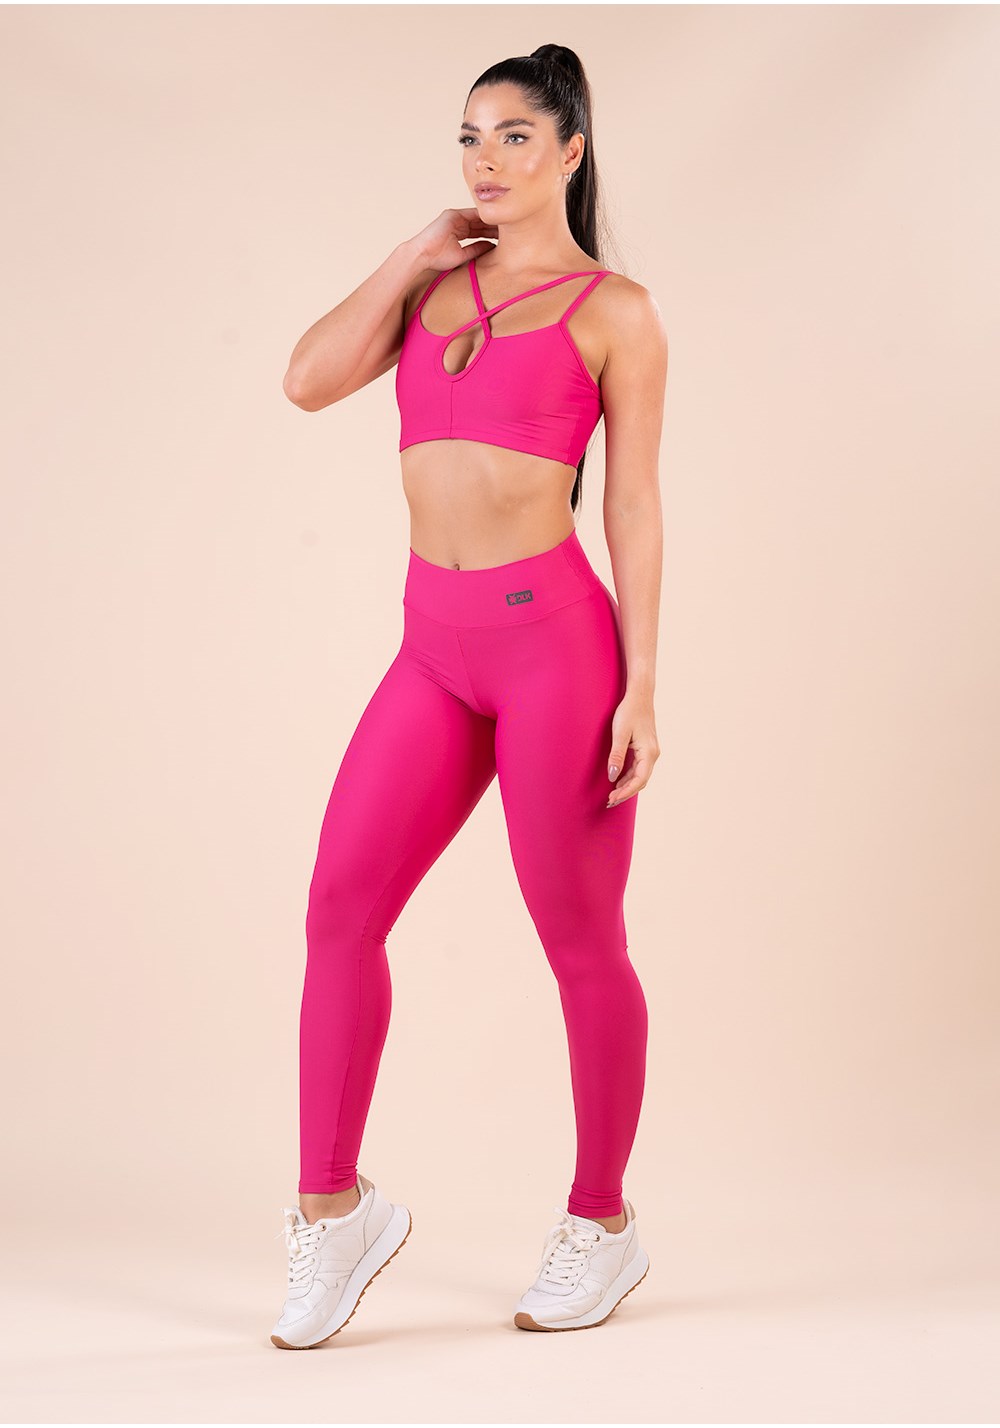 Shorts Toolfitness Sport Feminino - Candy Pink - ToolFitness - Acessórios  para Crossfit e LPO